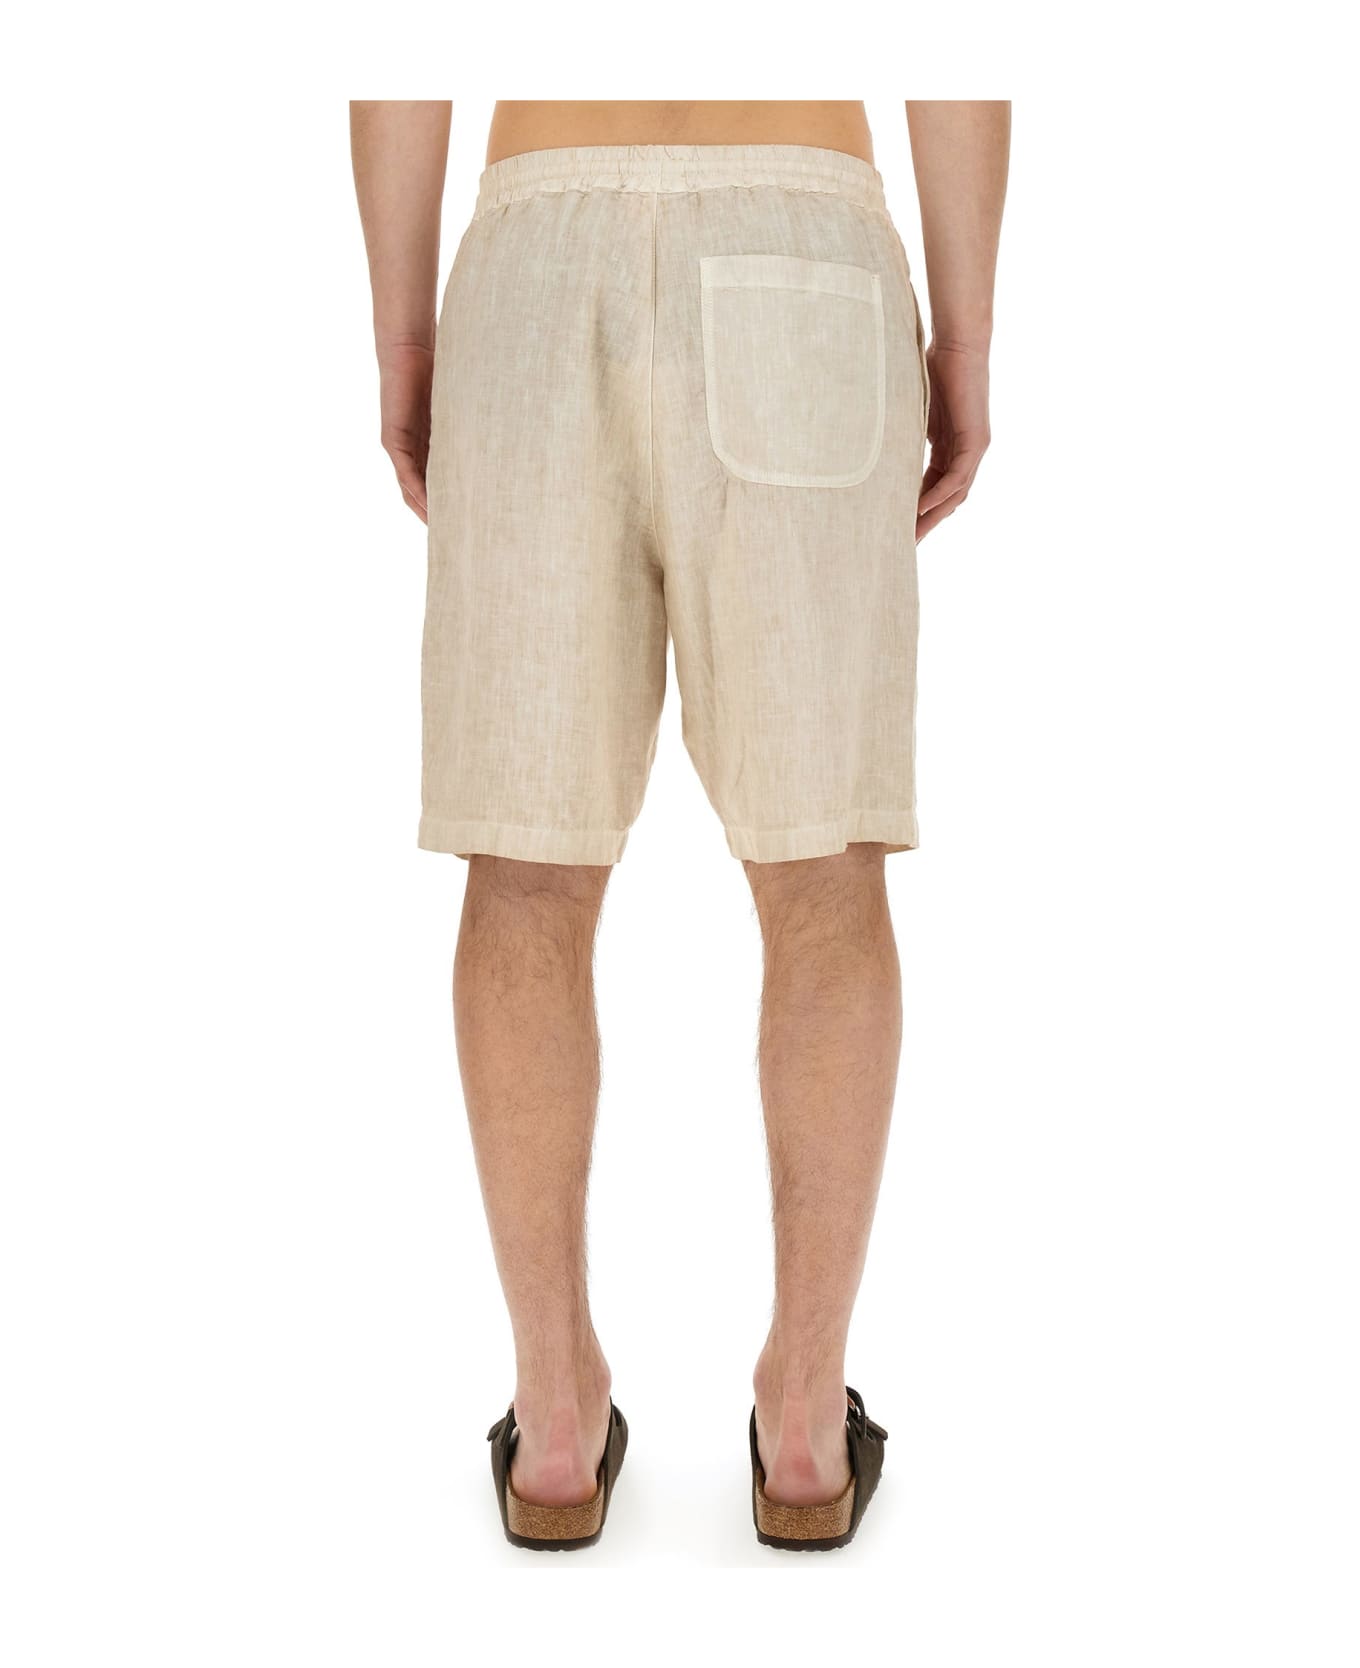 120% Lino Linen Bermuda Shorts